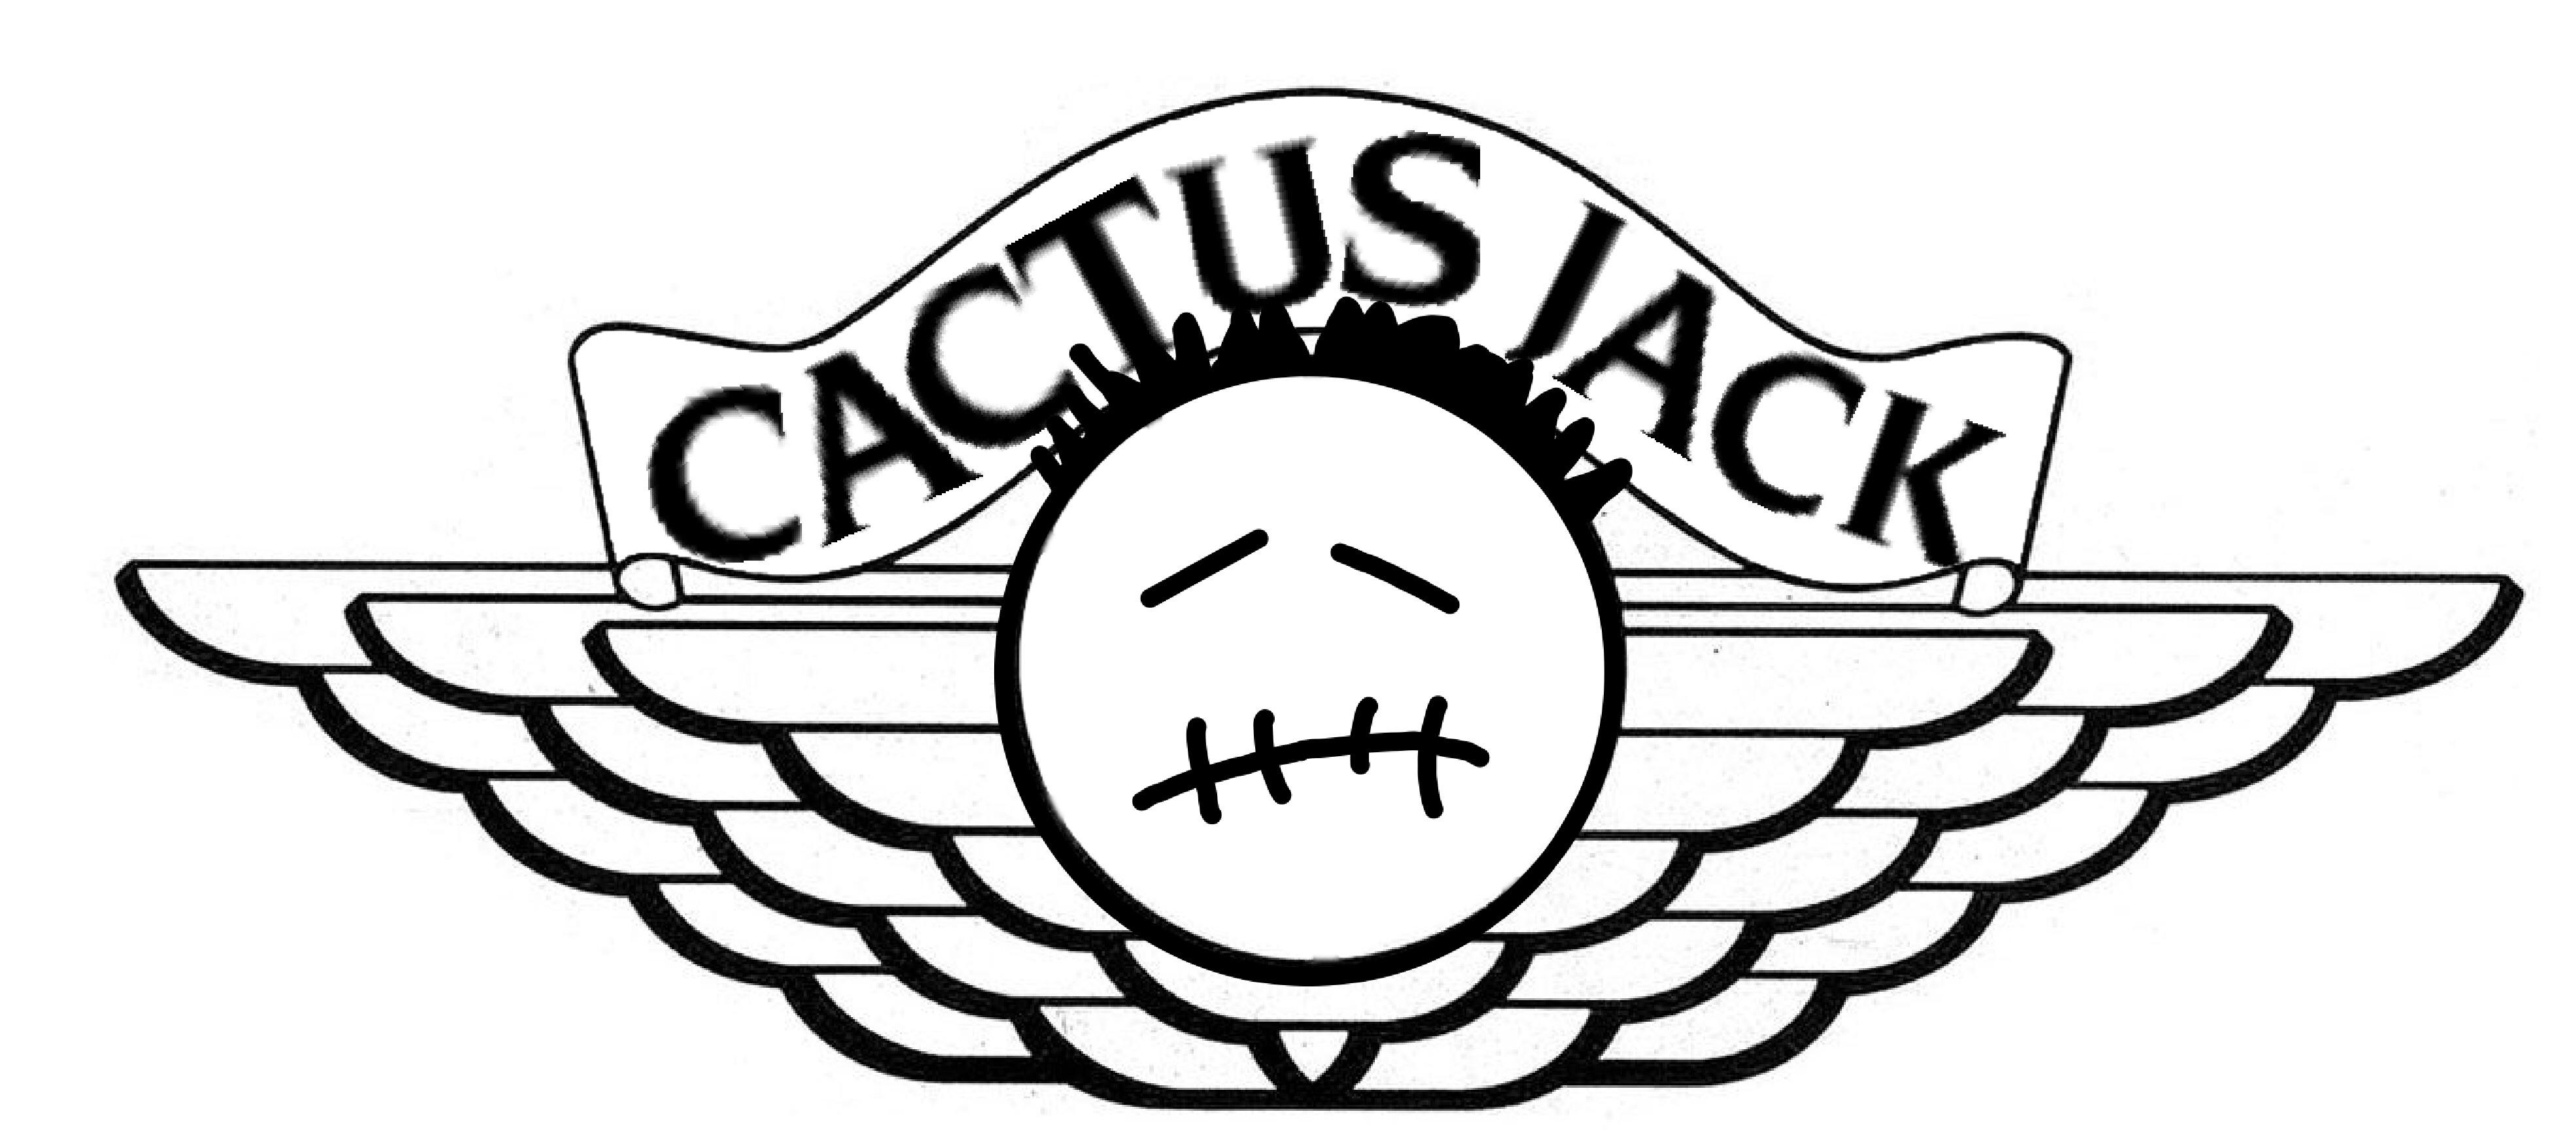 Historia marki Cactus Jack